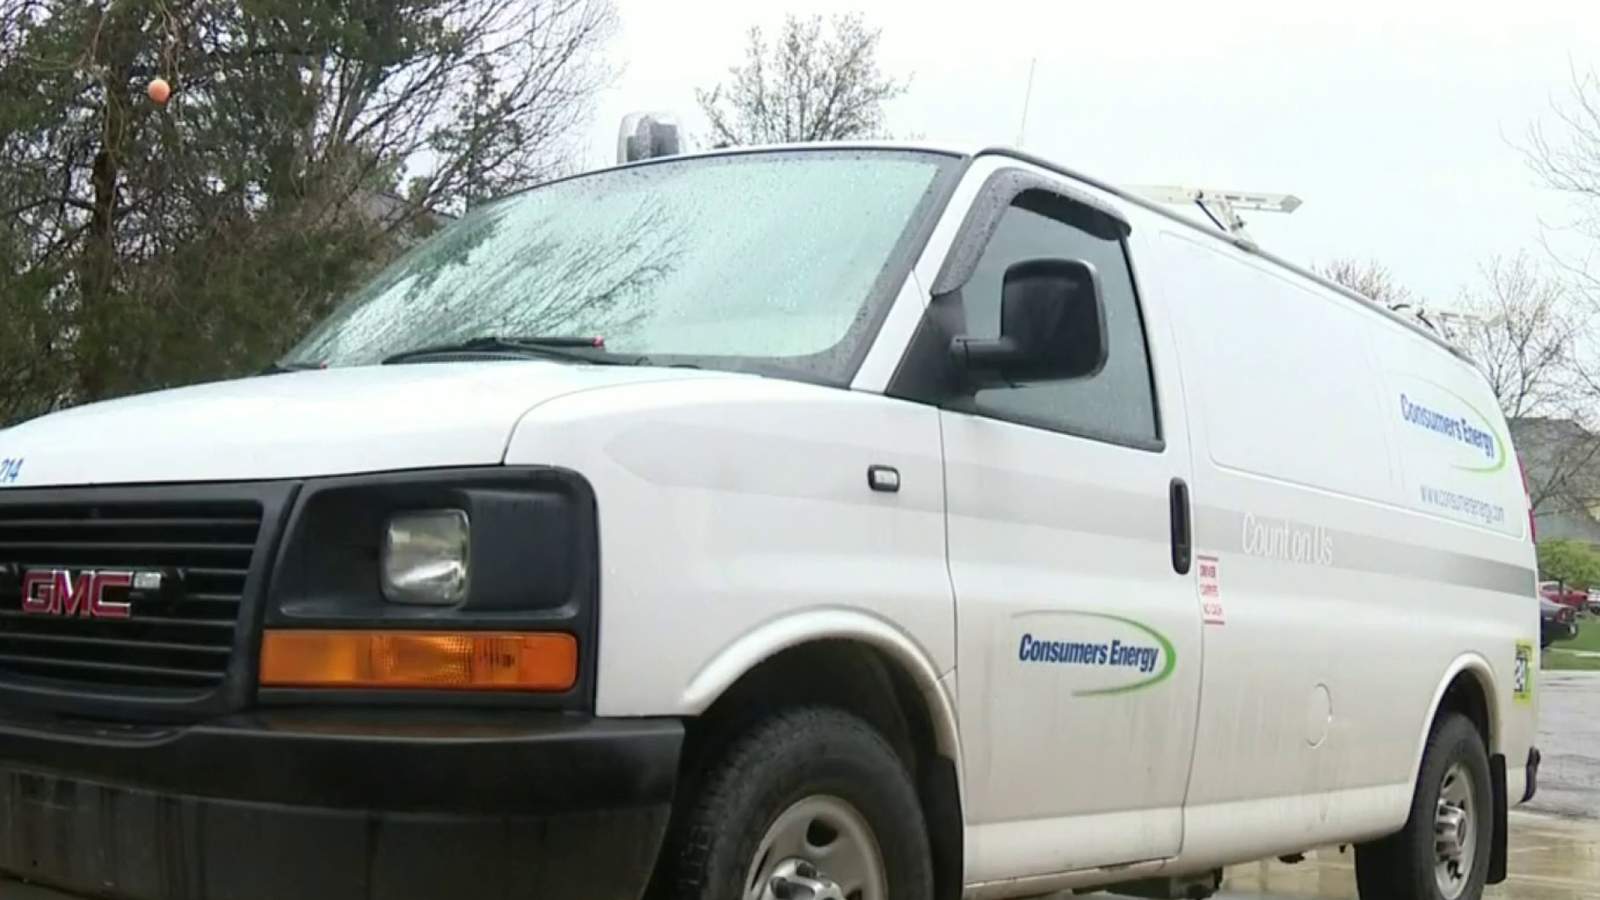 Homeowner’s association threatening fines for essential worker’s van in driveway